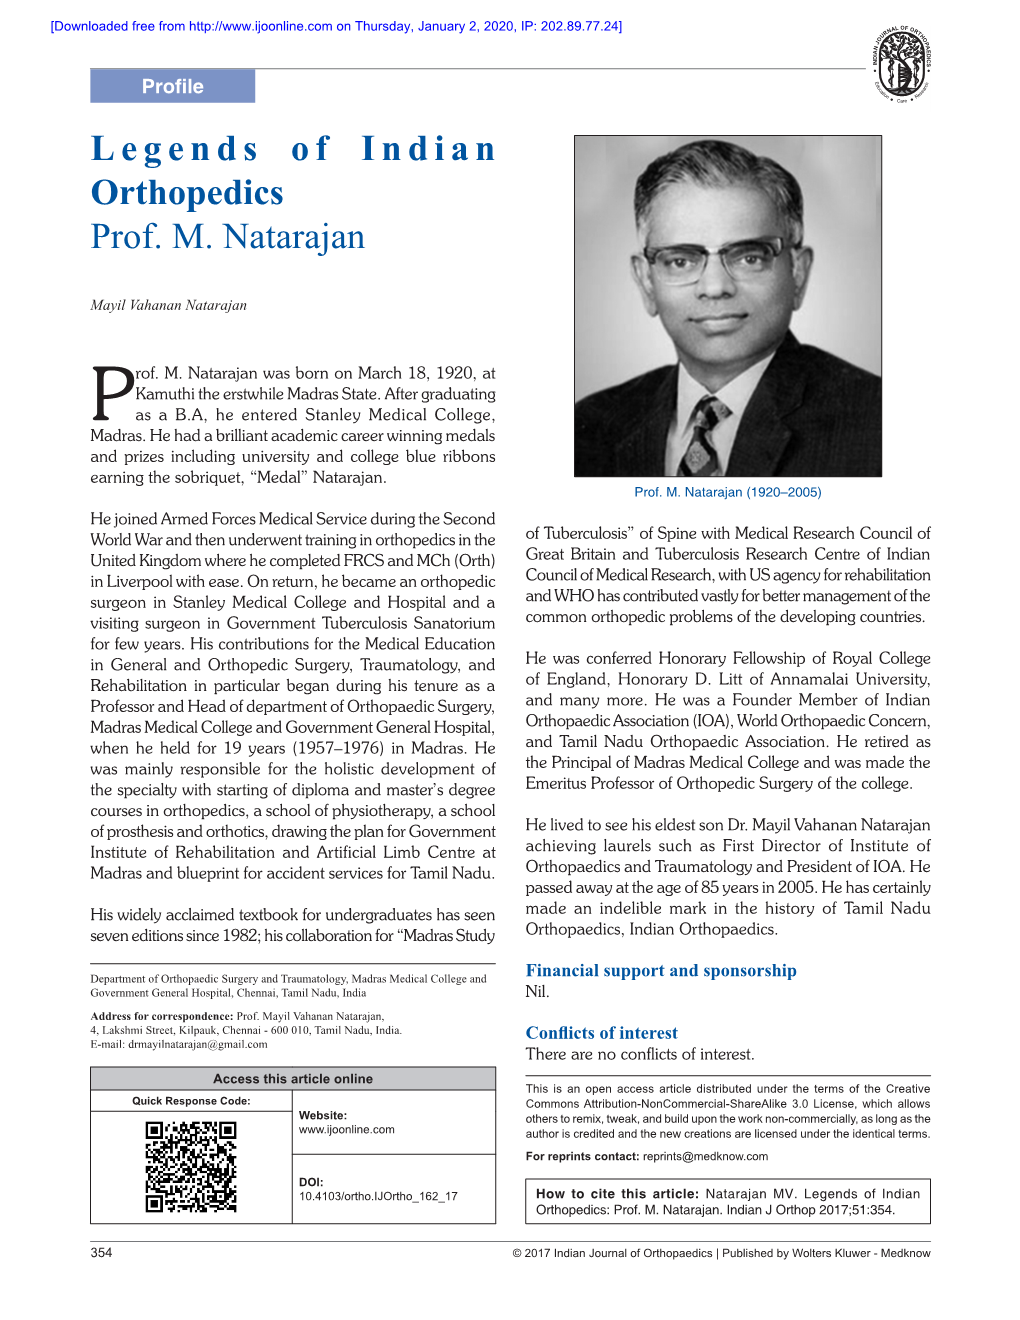 Legends of Indian Orthopedics Prof. M. Natarajan